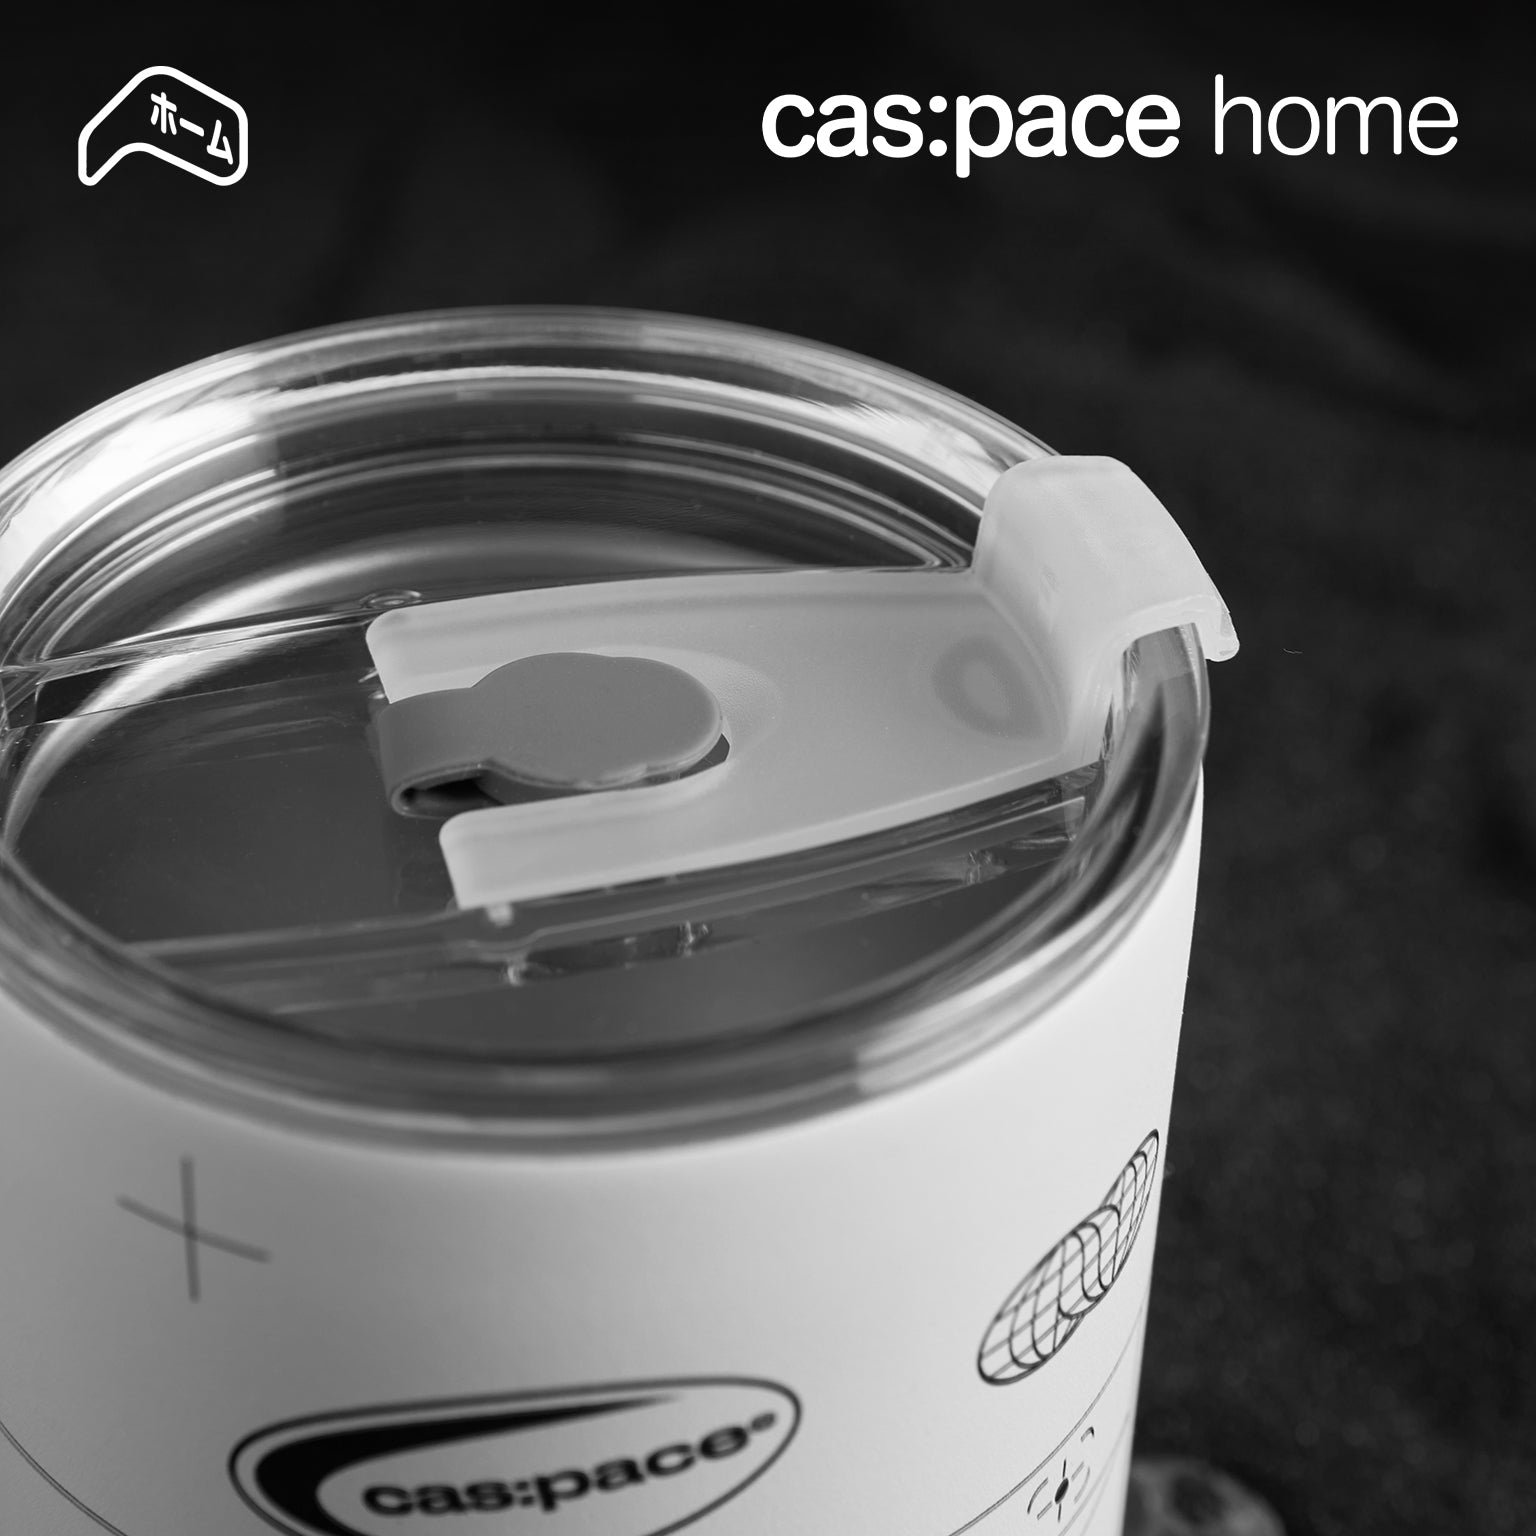 cas:pace home 「宇宙急救」ステンレス保温カップ - cas:pace 殼空間